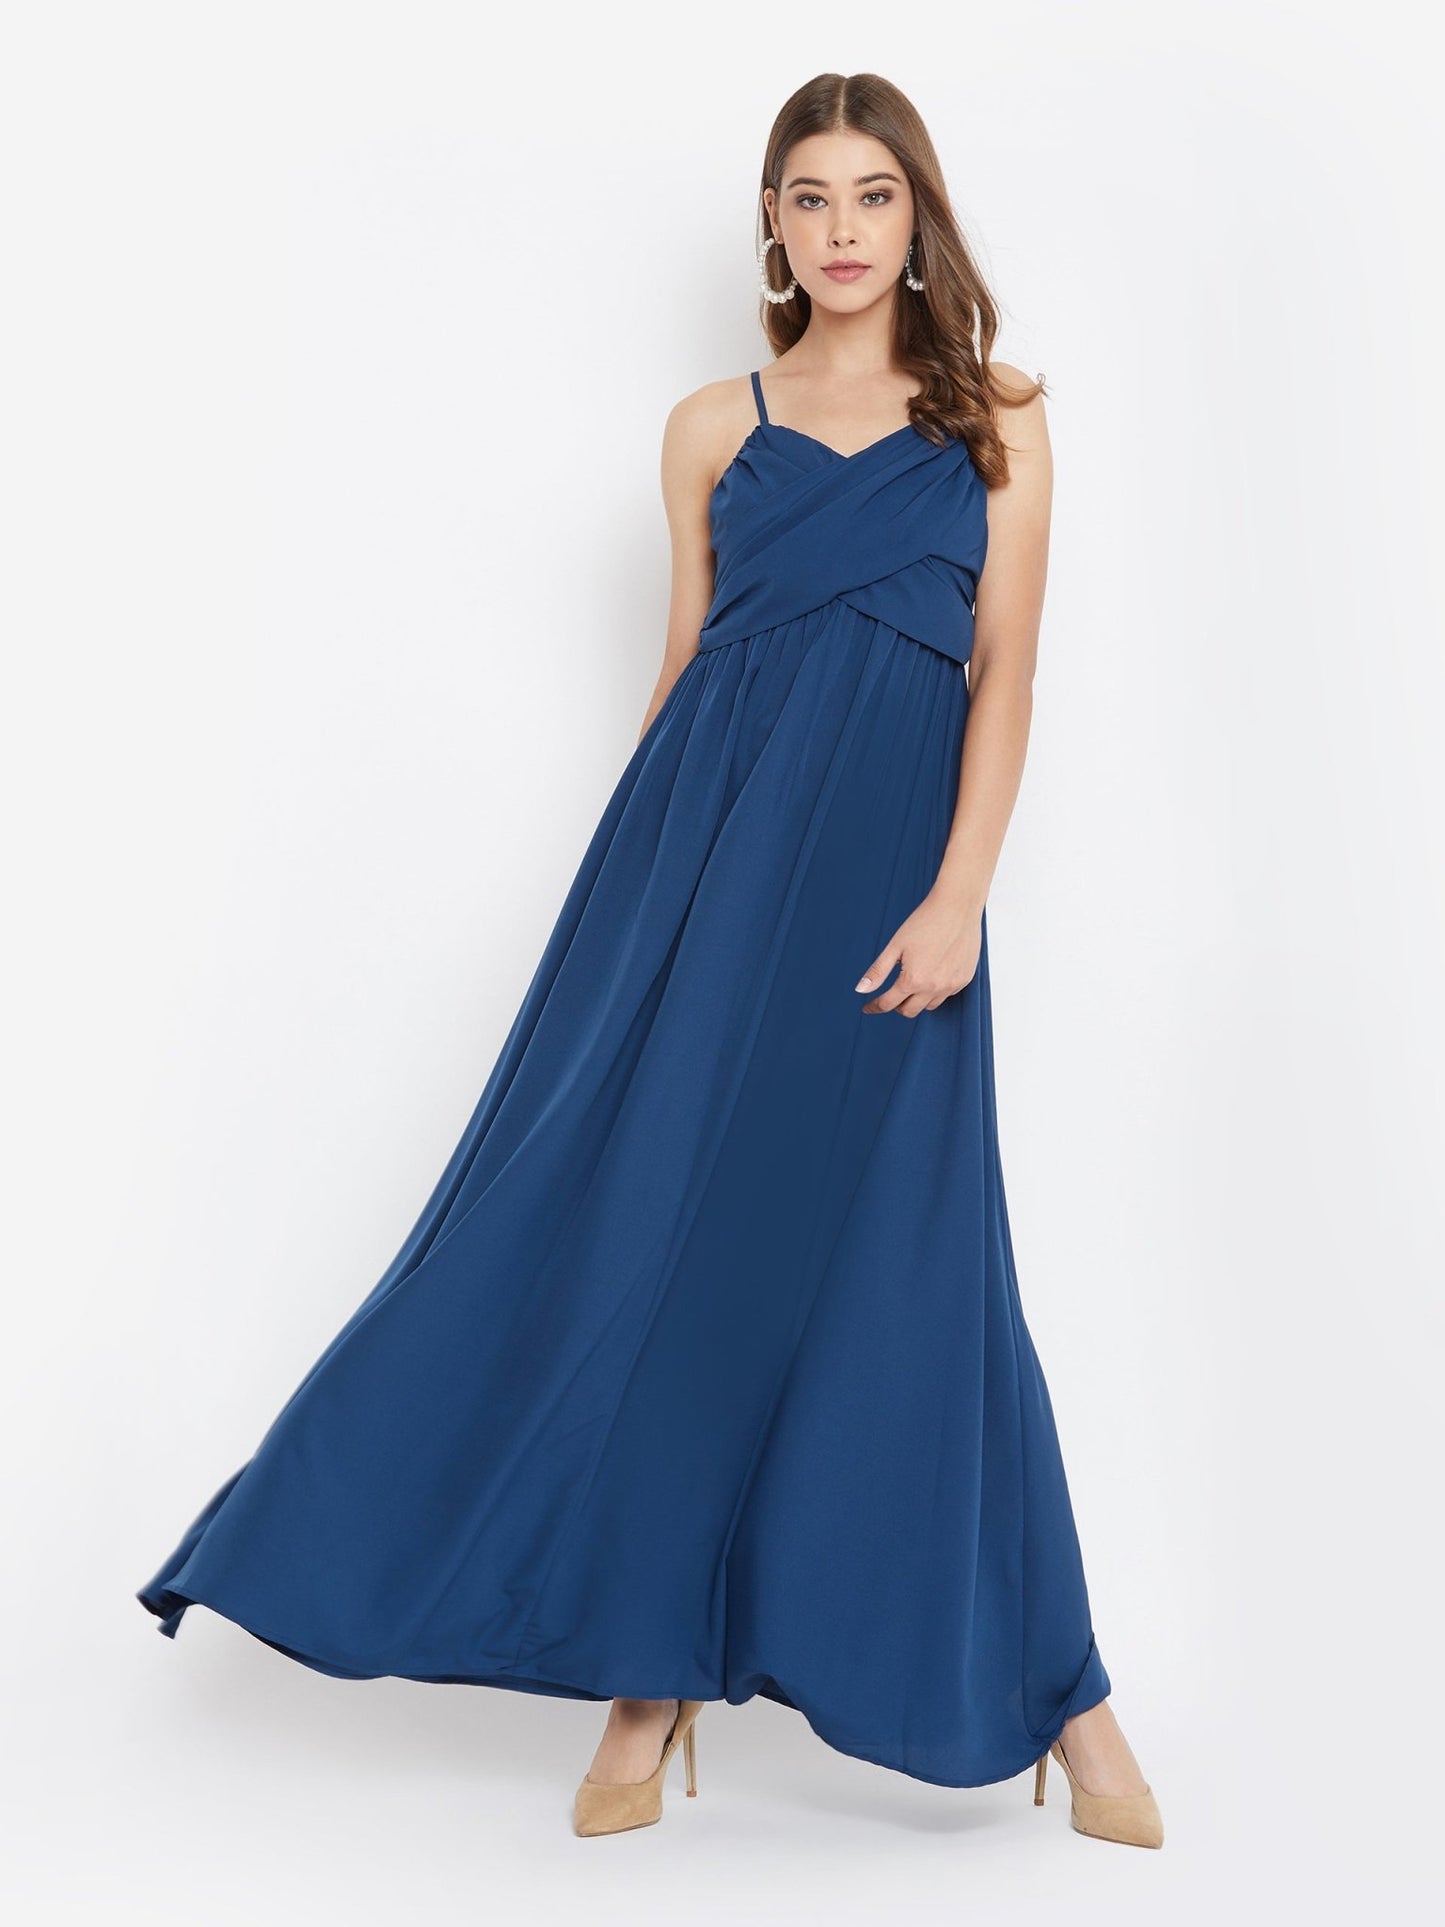 Folk Republic Women Solid Blue V-Neck Sleeveless Ruched Bust Maxi Dress - #folk republic#